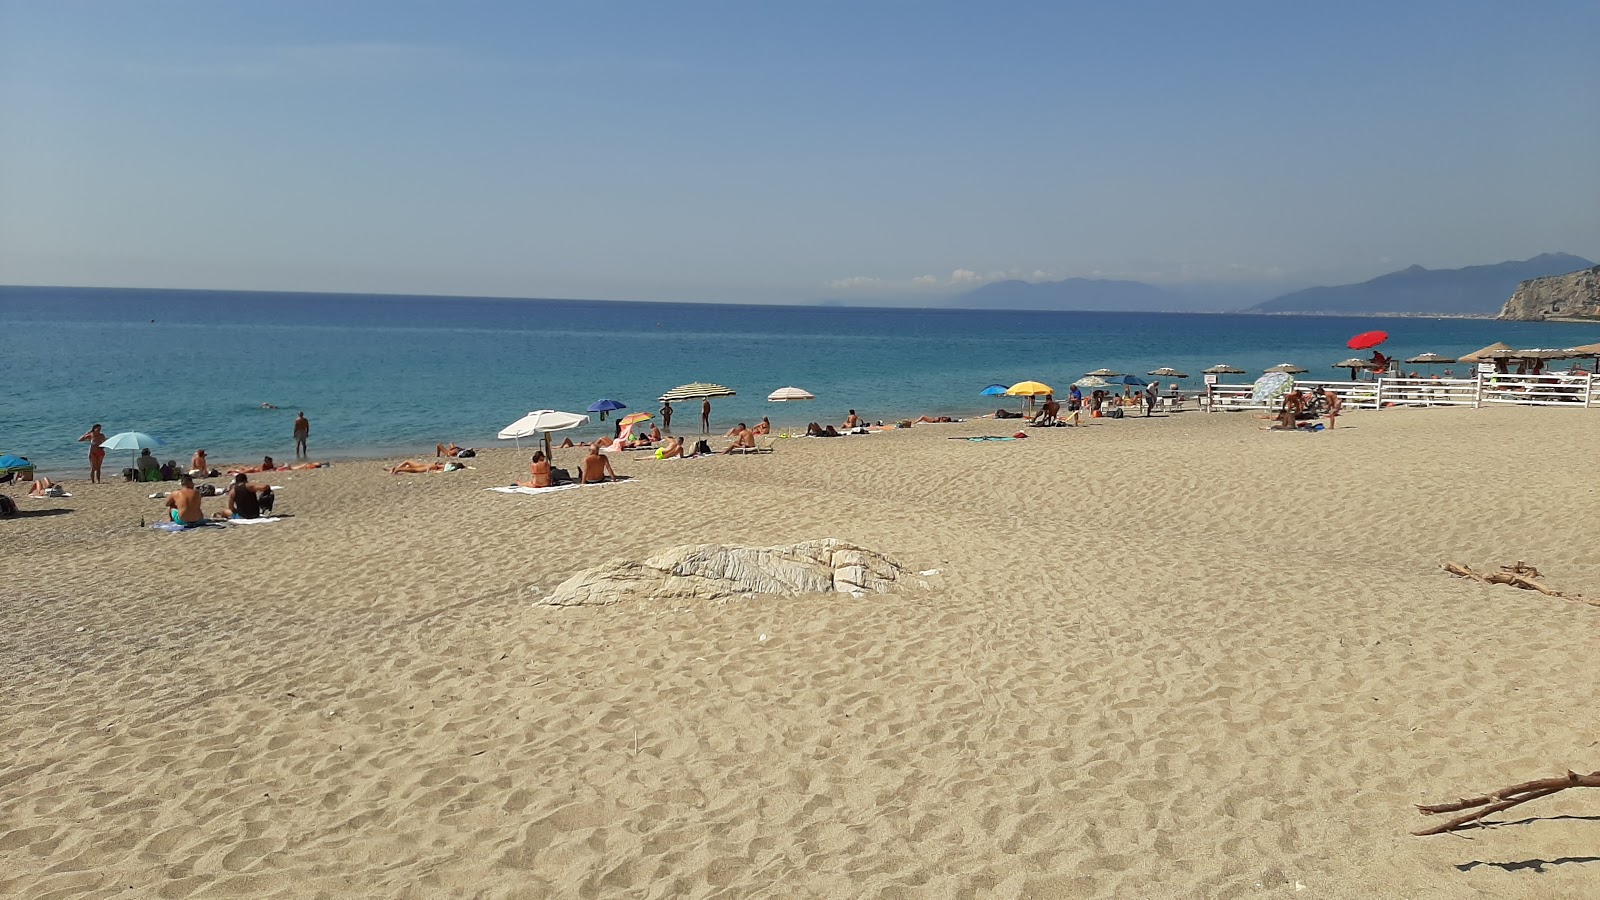 Foto van Spiaggia libera del Castelletto en de nederzetting